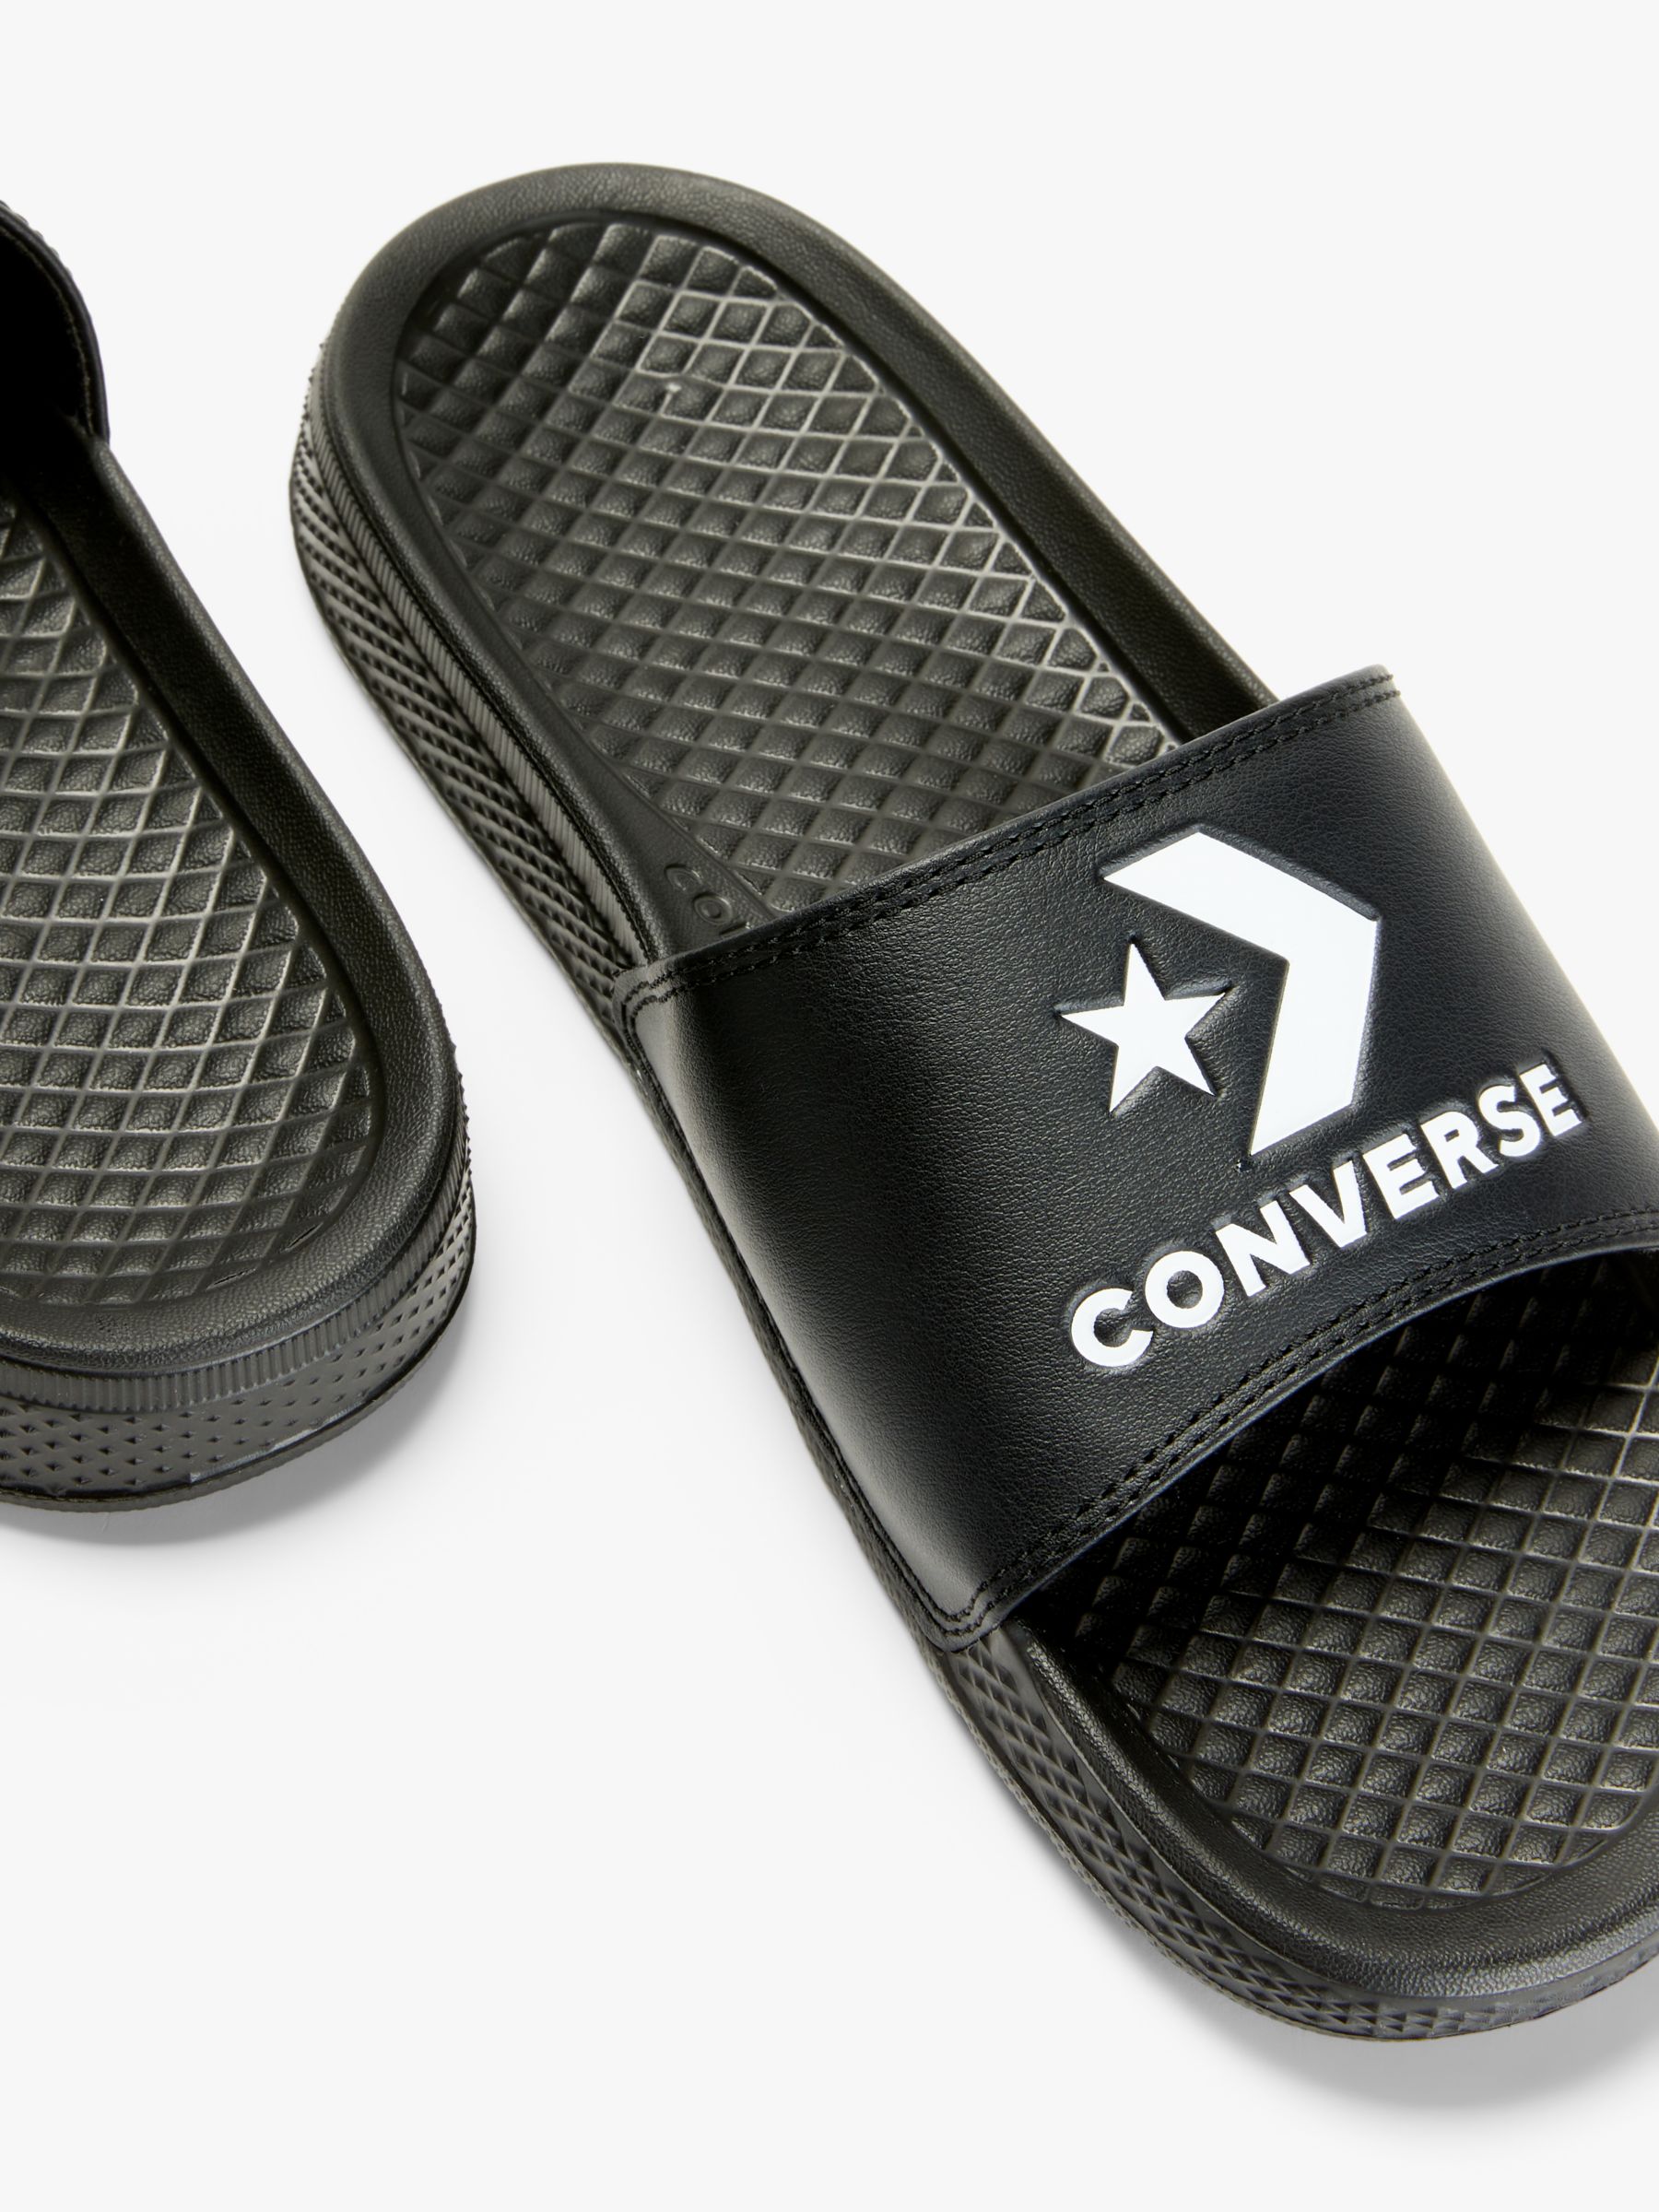 Converse All Star Low Top Sliders, Black at John Lewis & Partners